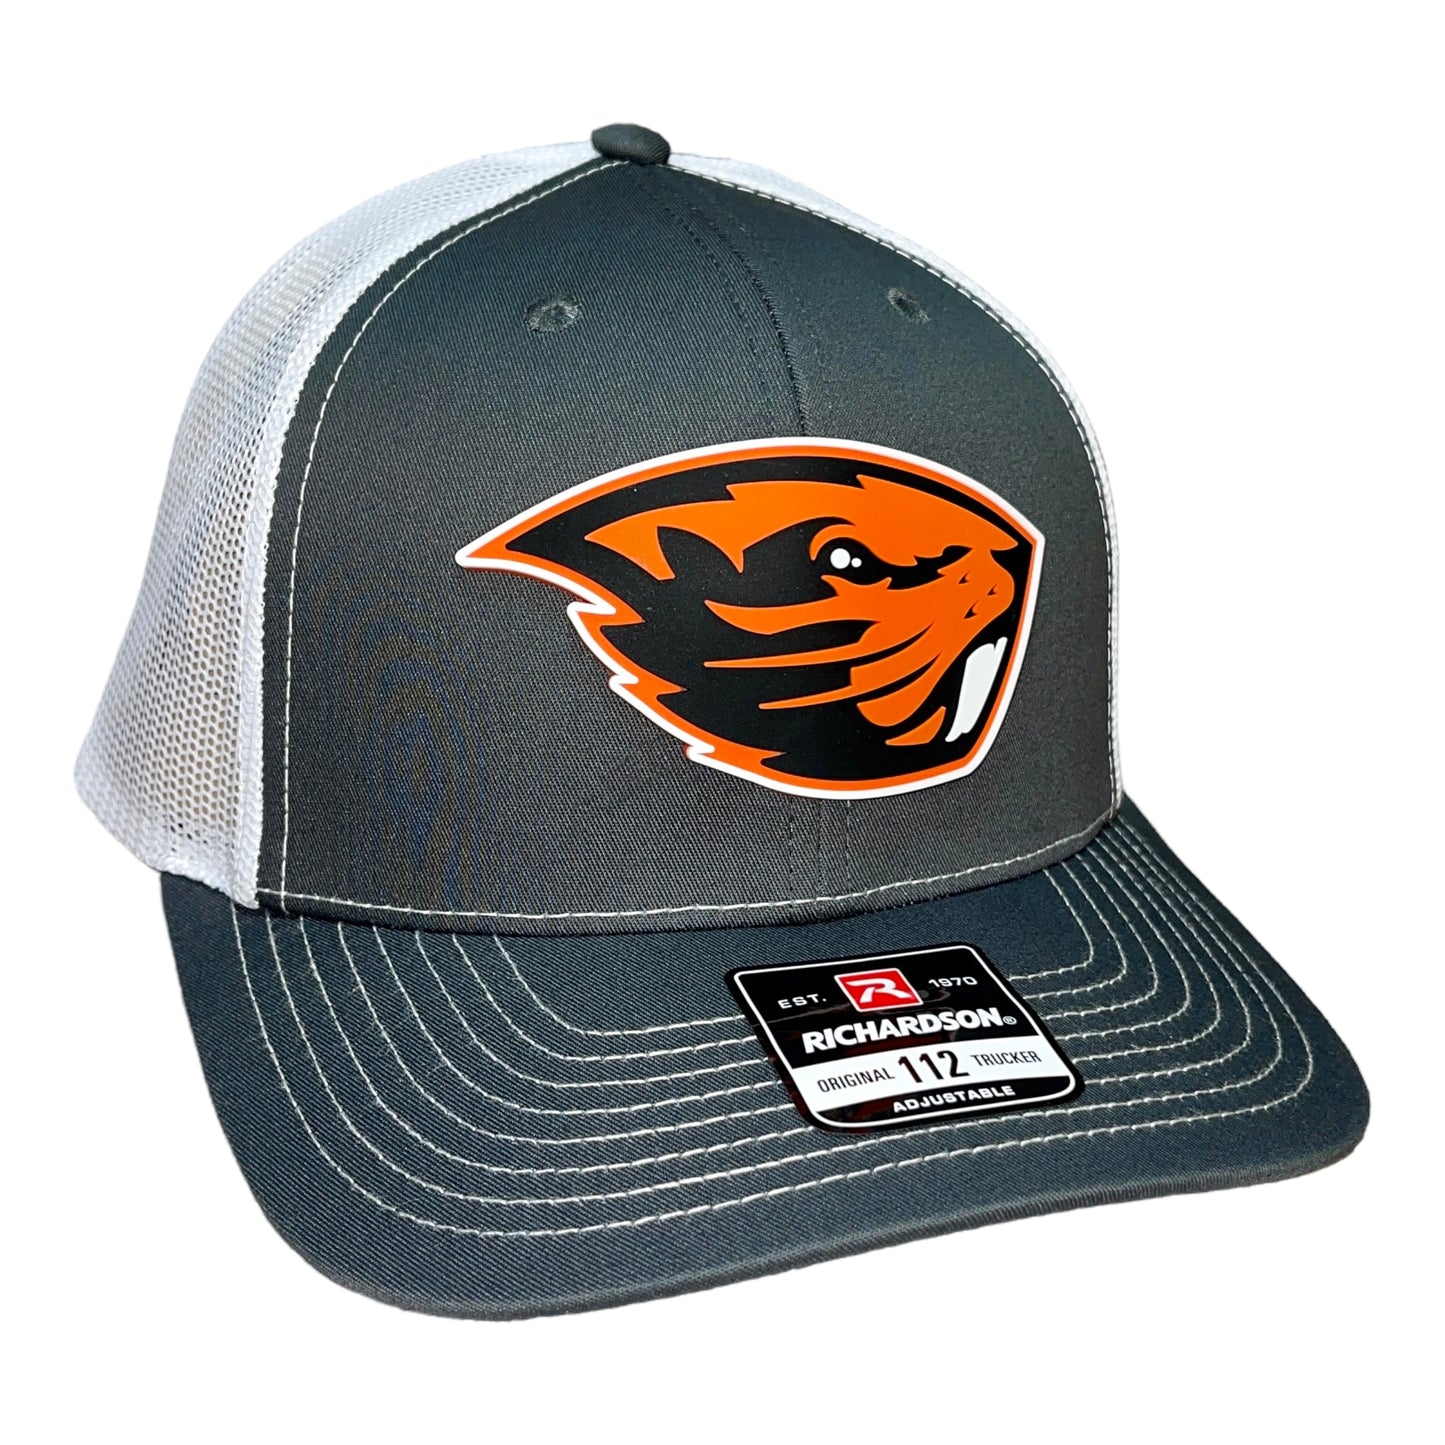 Oregon State Beavers 3D Snapback Trucker Hat- Charcoal/ White